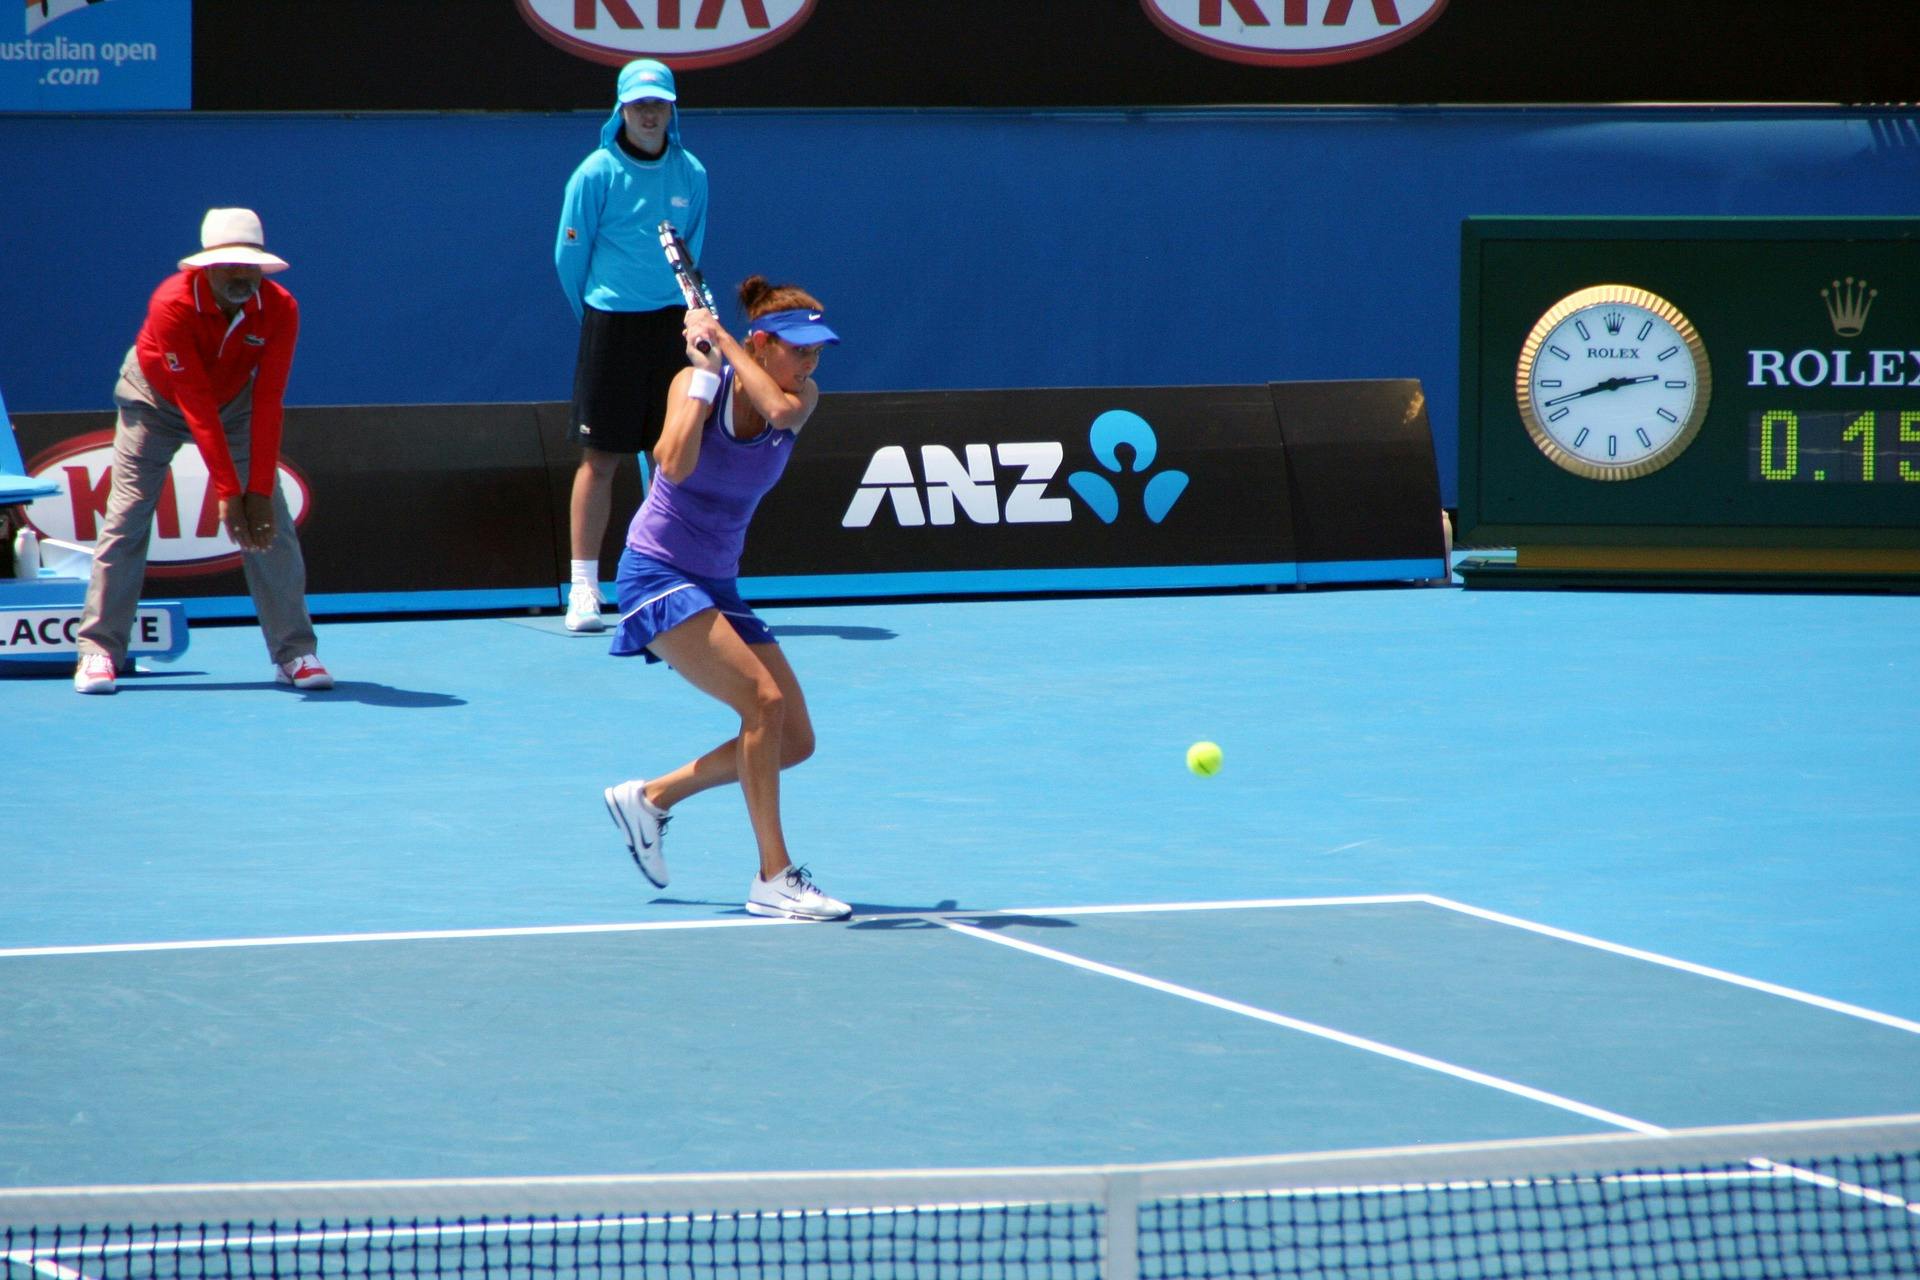 Woman hitting tennis ball at Australian Open